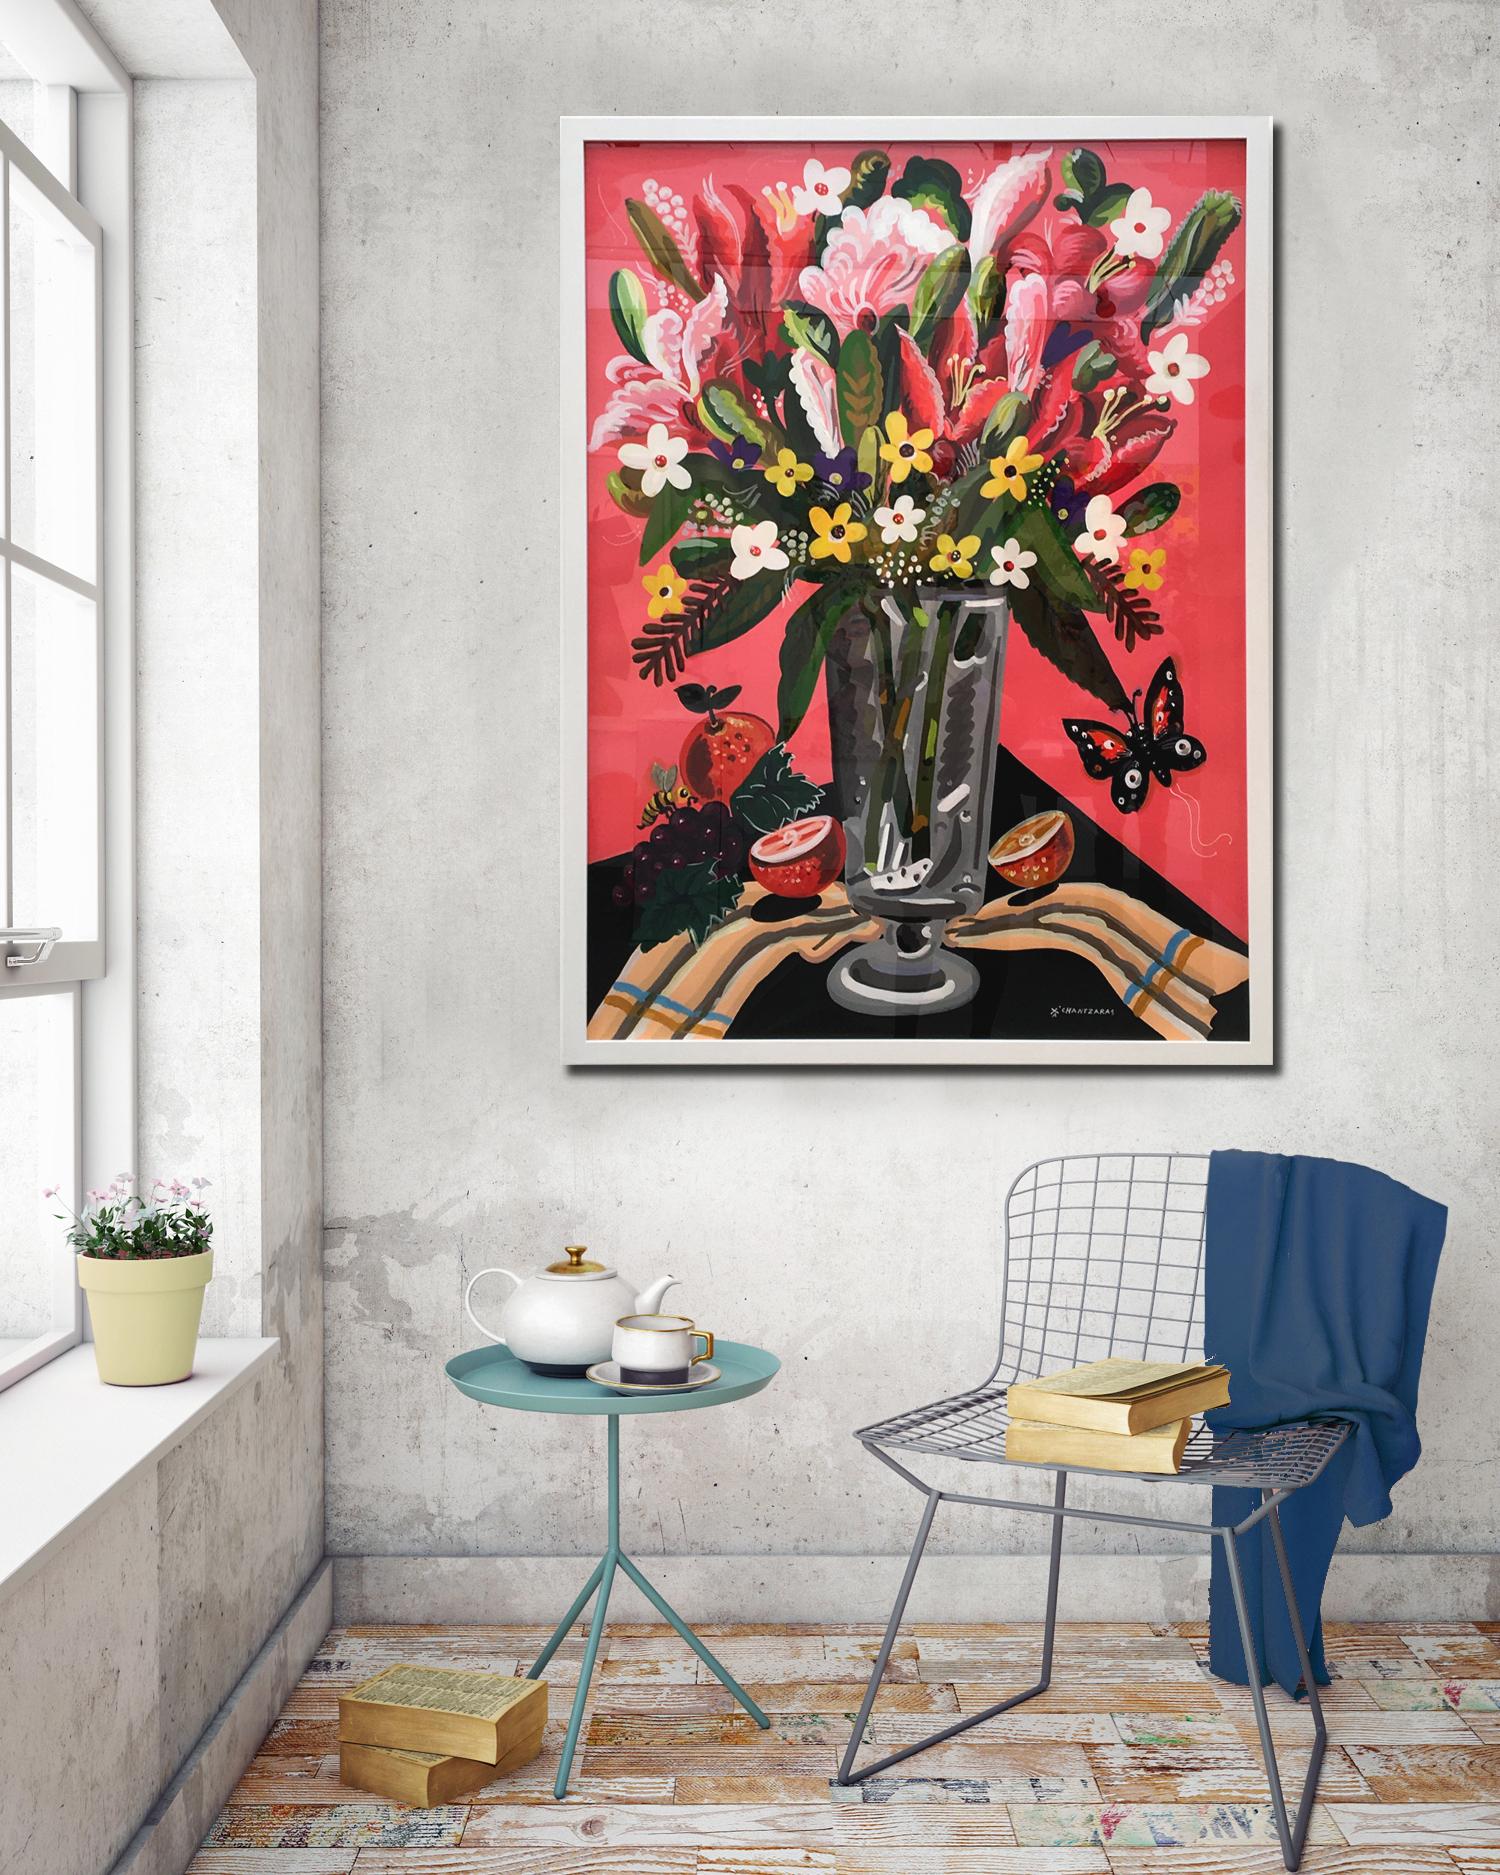 World of Abundance - Pop art style-classical colorful still-life flower painting - Contemporary Painting by Apostolos Chantzaras